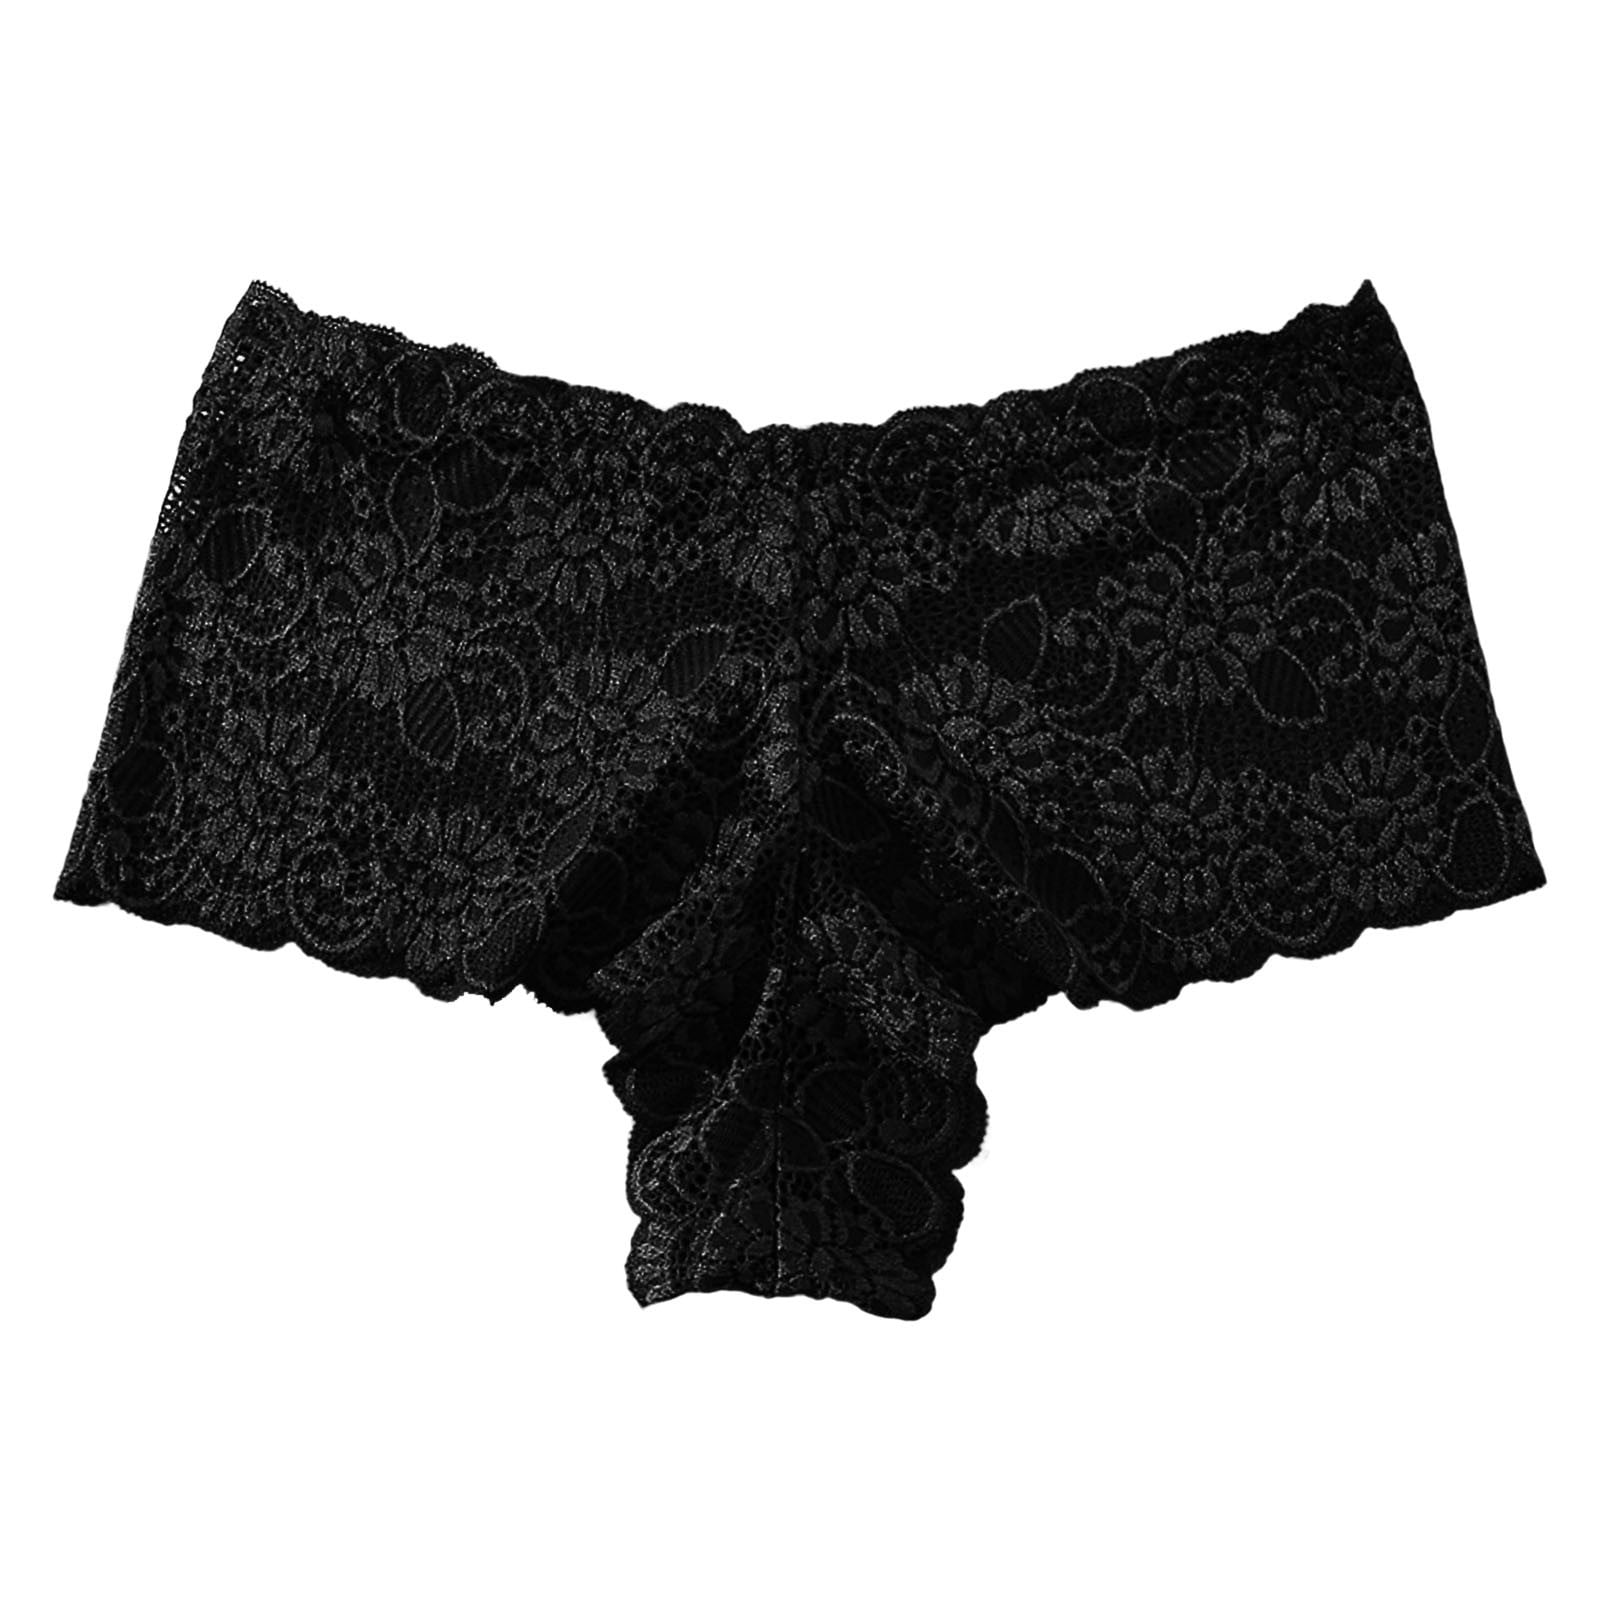 PMUYBHF 2X Underwear Women Plus Size Women's Lace Hollow Underwear